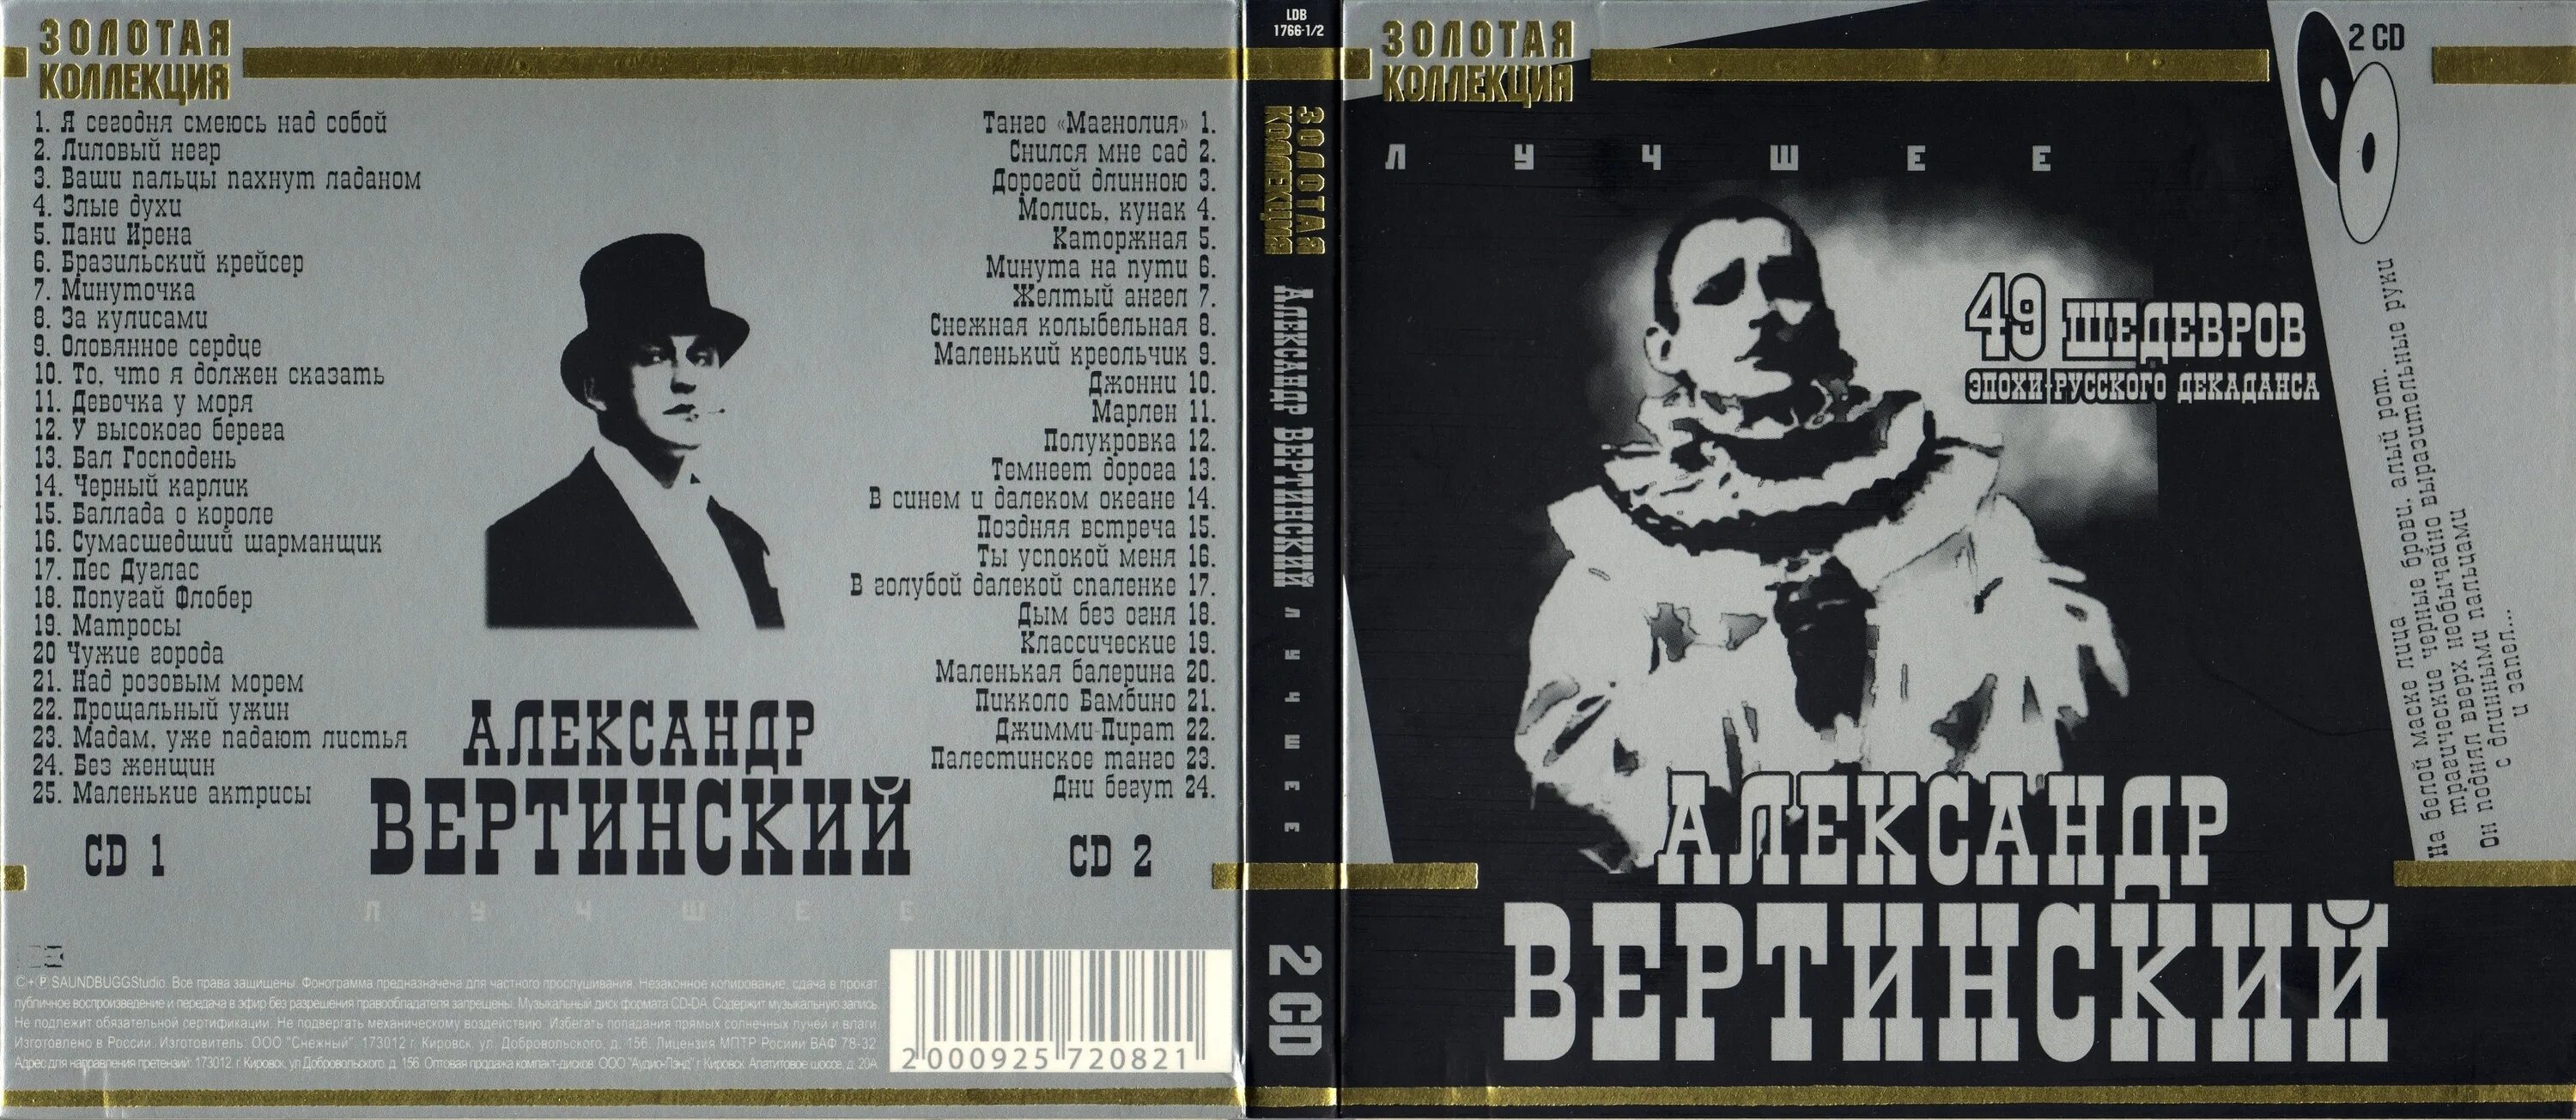 Alexander Vertinsky - Vertinski 2cd обложка.